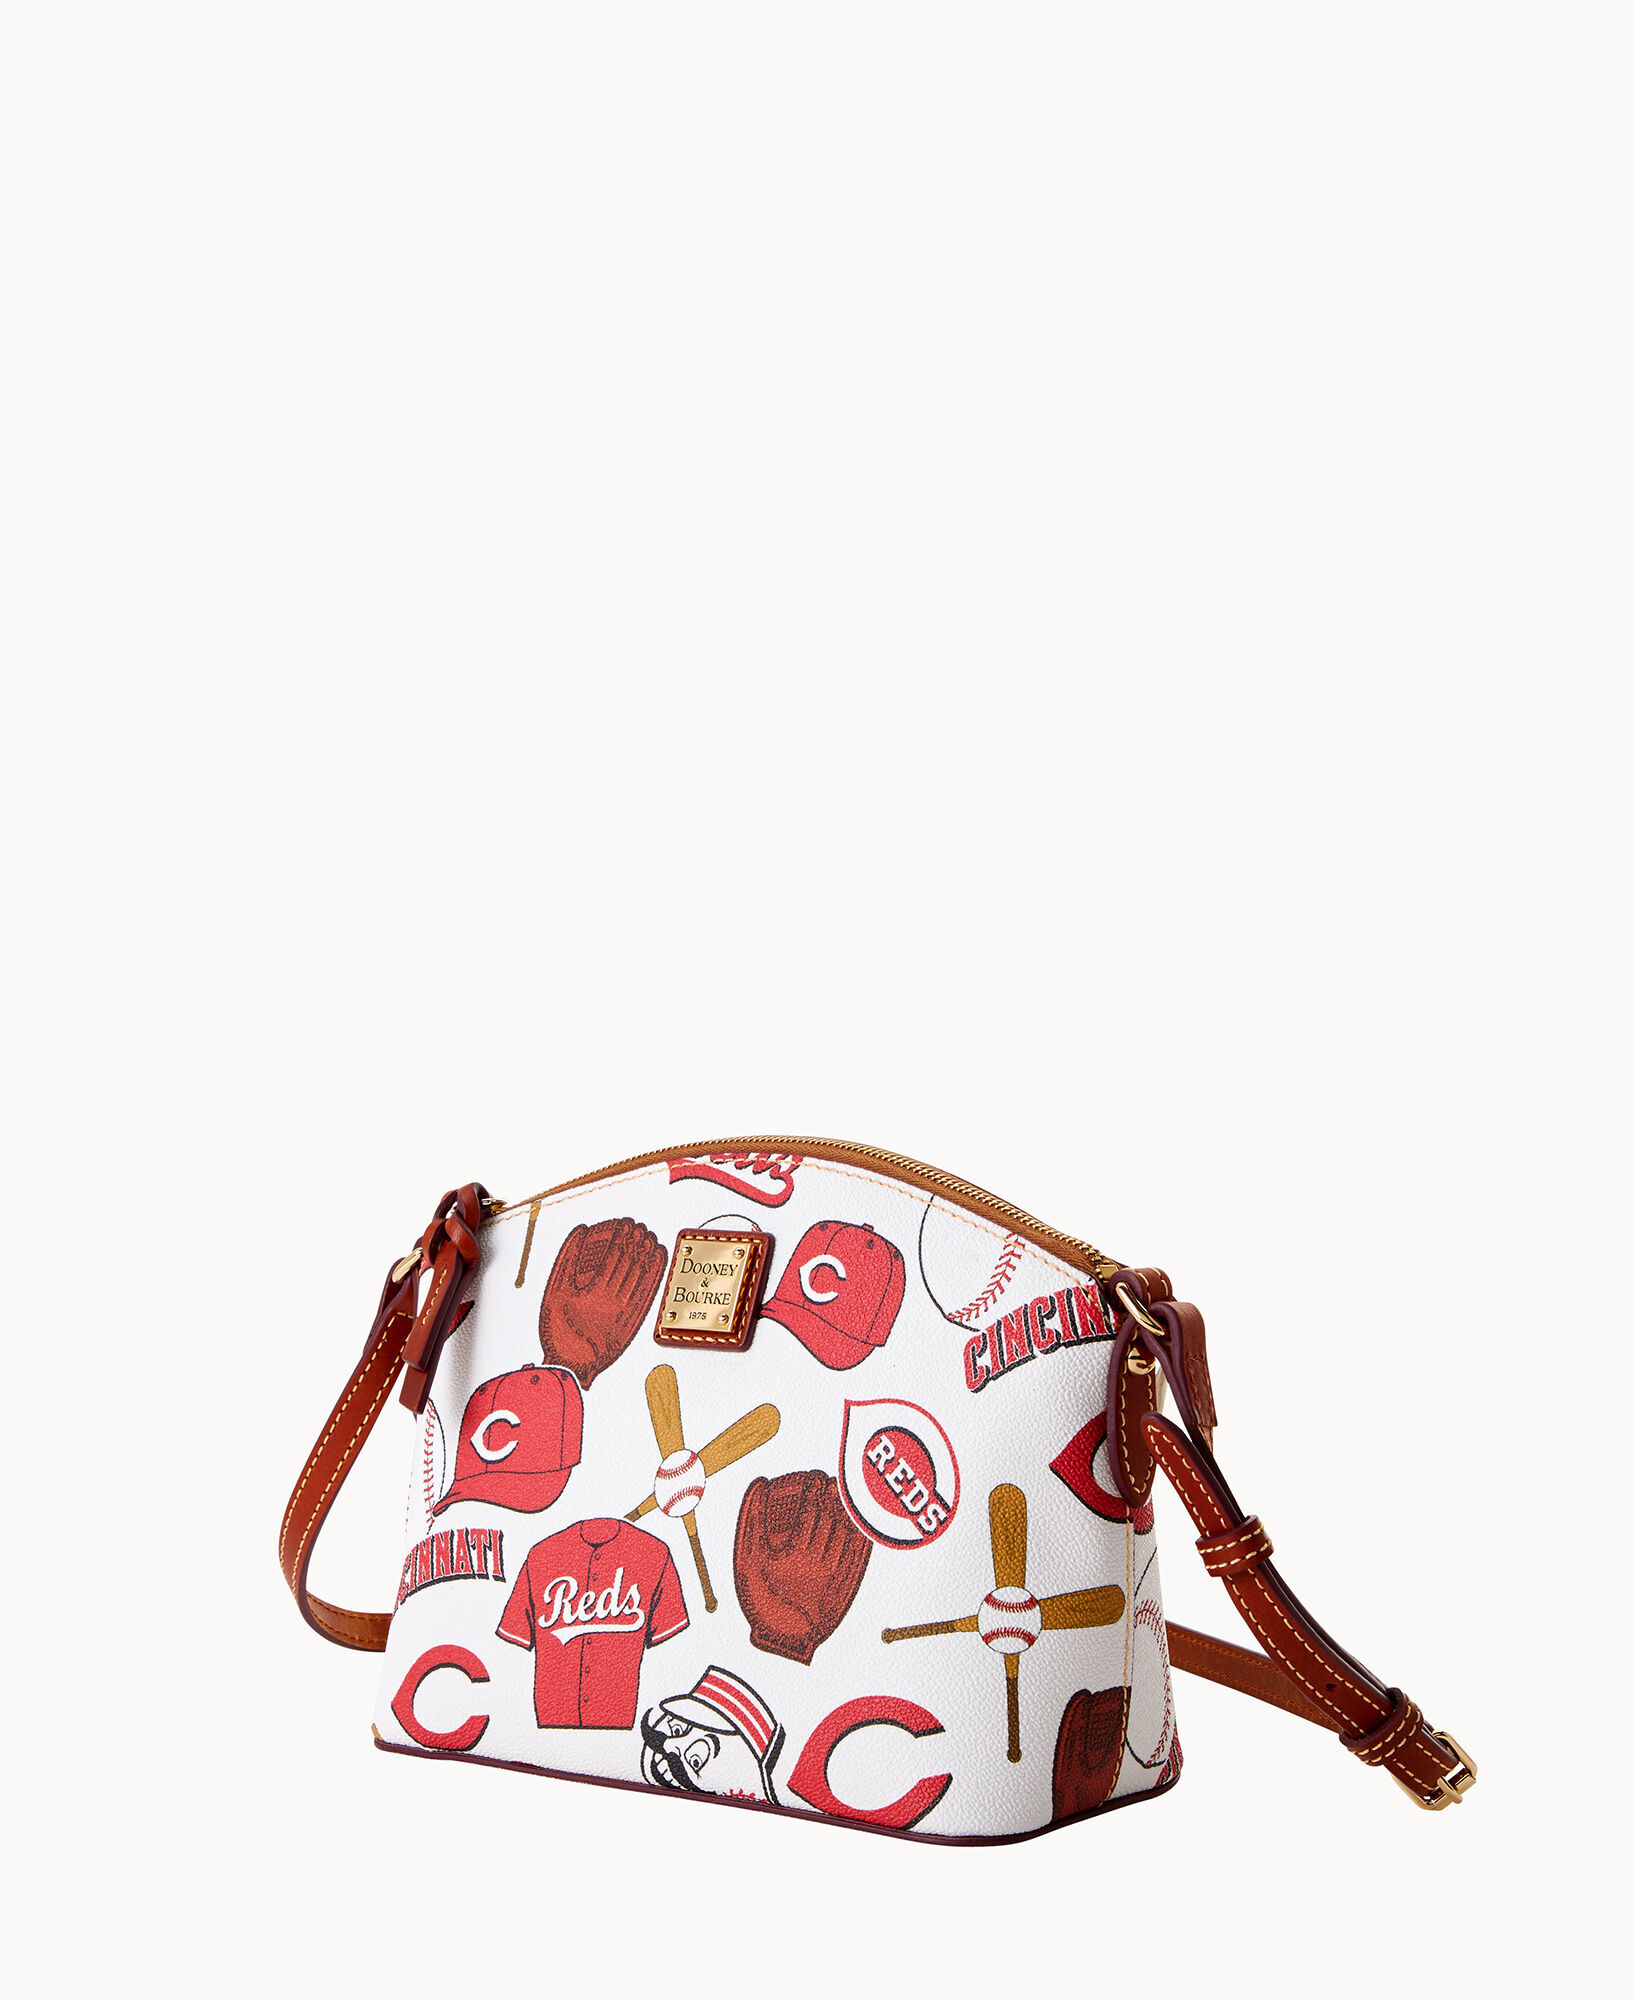 Dooney & Bourke Baseball Reds Crossbody Bag, Multi-Color